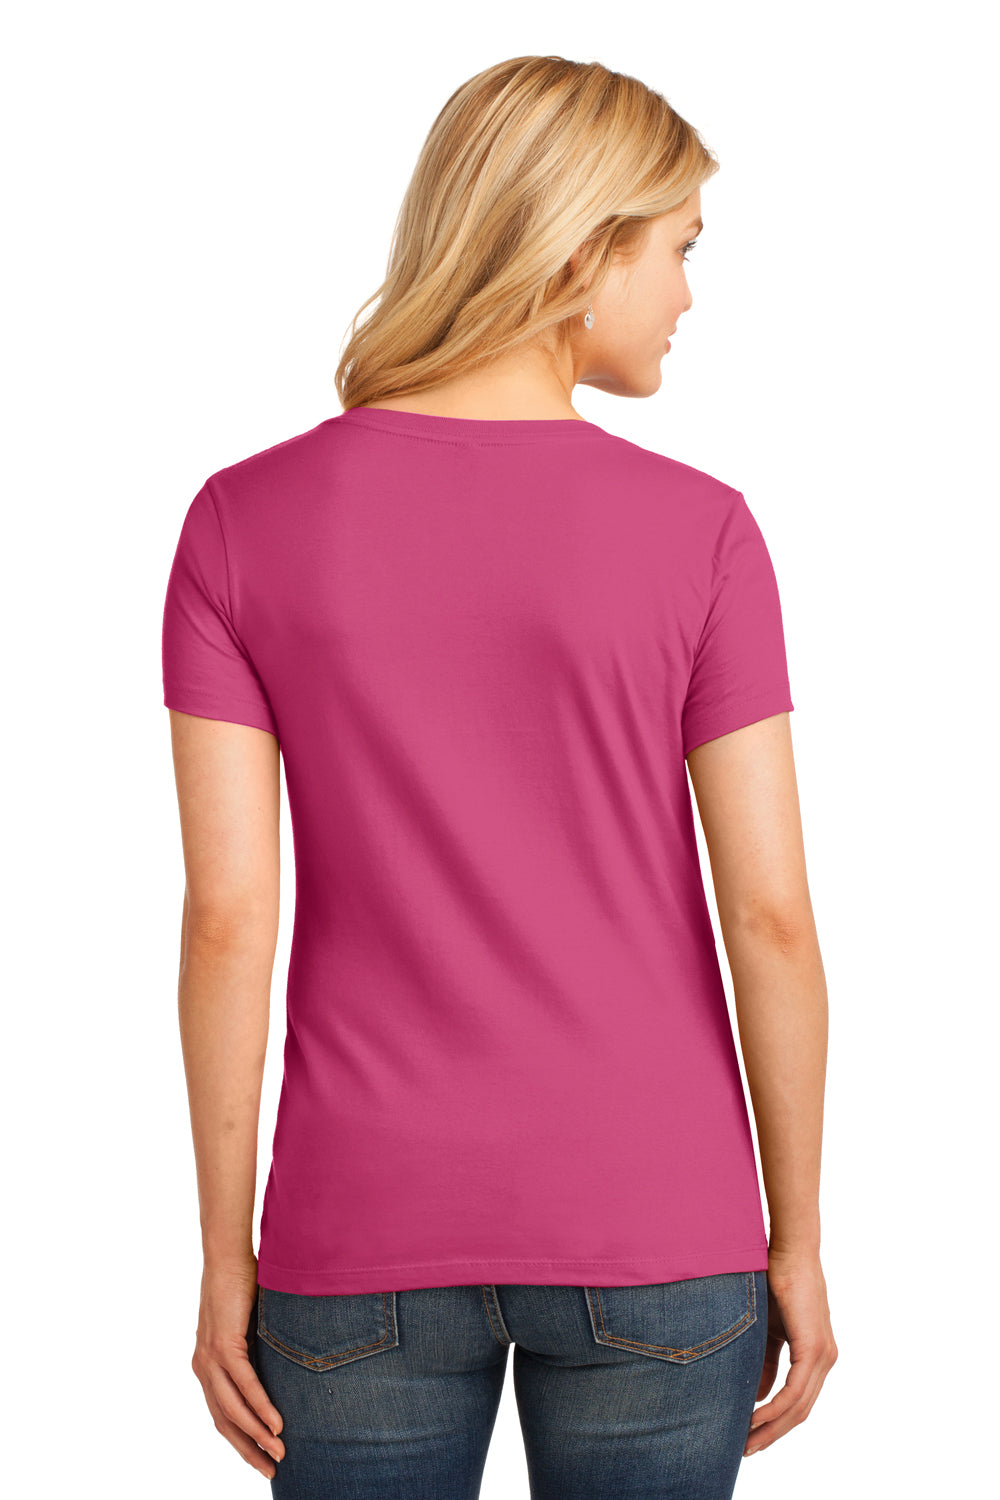 Port & Company LPC54V Womens Core Short Sleeve V-Neck T-Shirt Sangria Pink Back